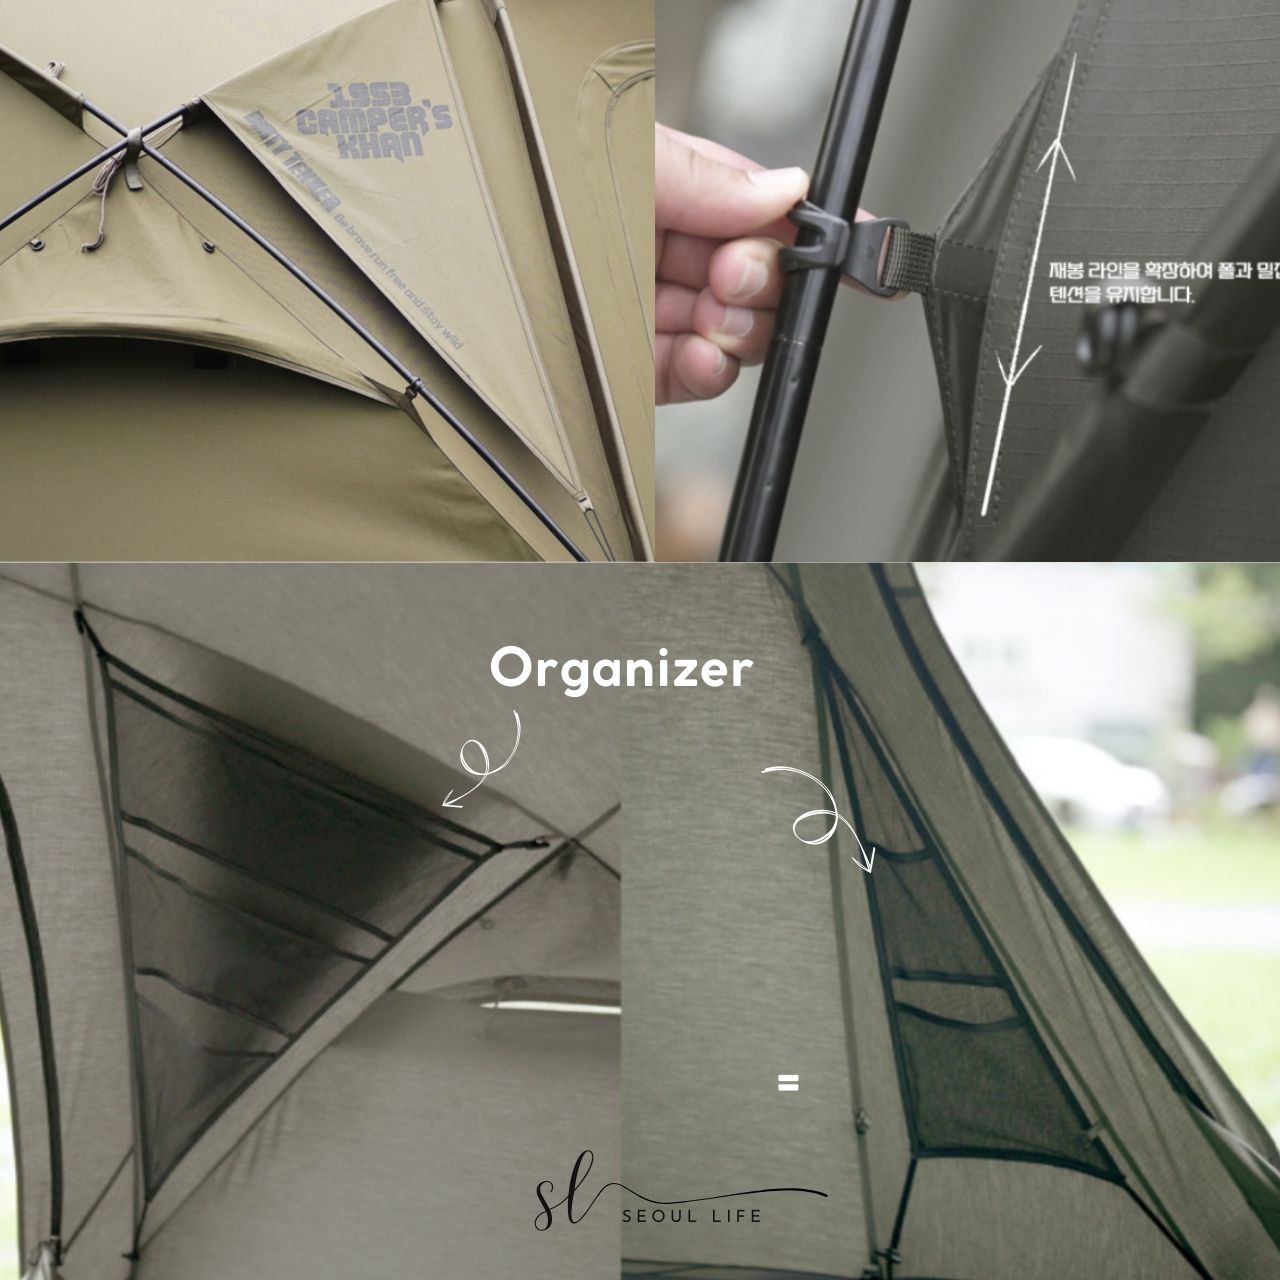 *Camperskan* Tenker 5M Octagon cotton blend (T/C) Tent/ Shelter, all-season, 4 people